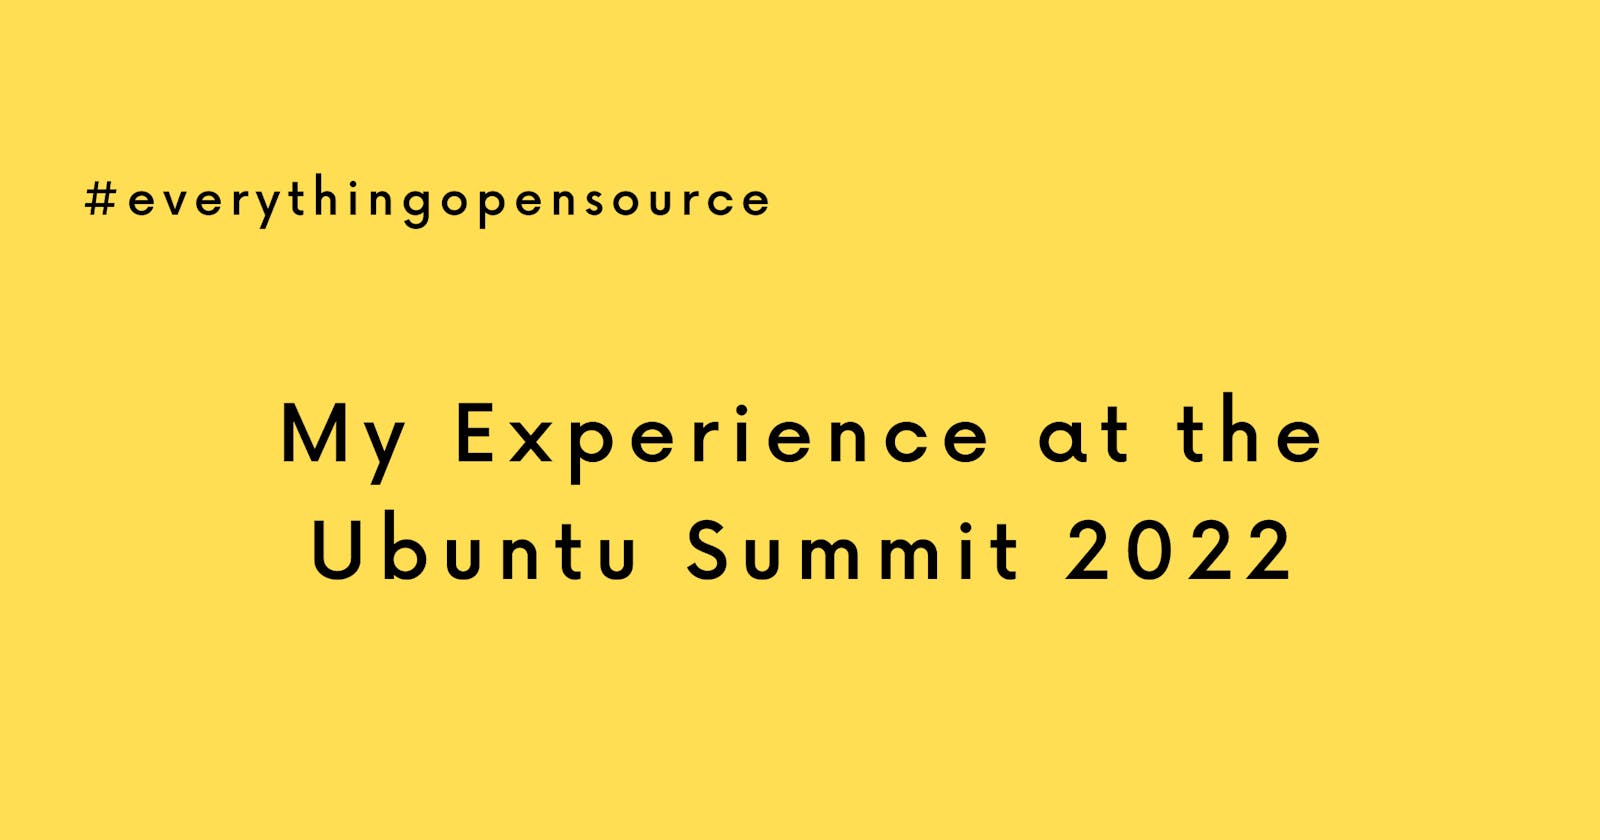 My Experience at the Ubuntu Summit 2022